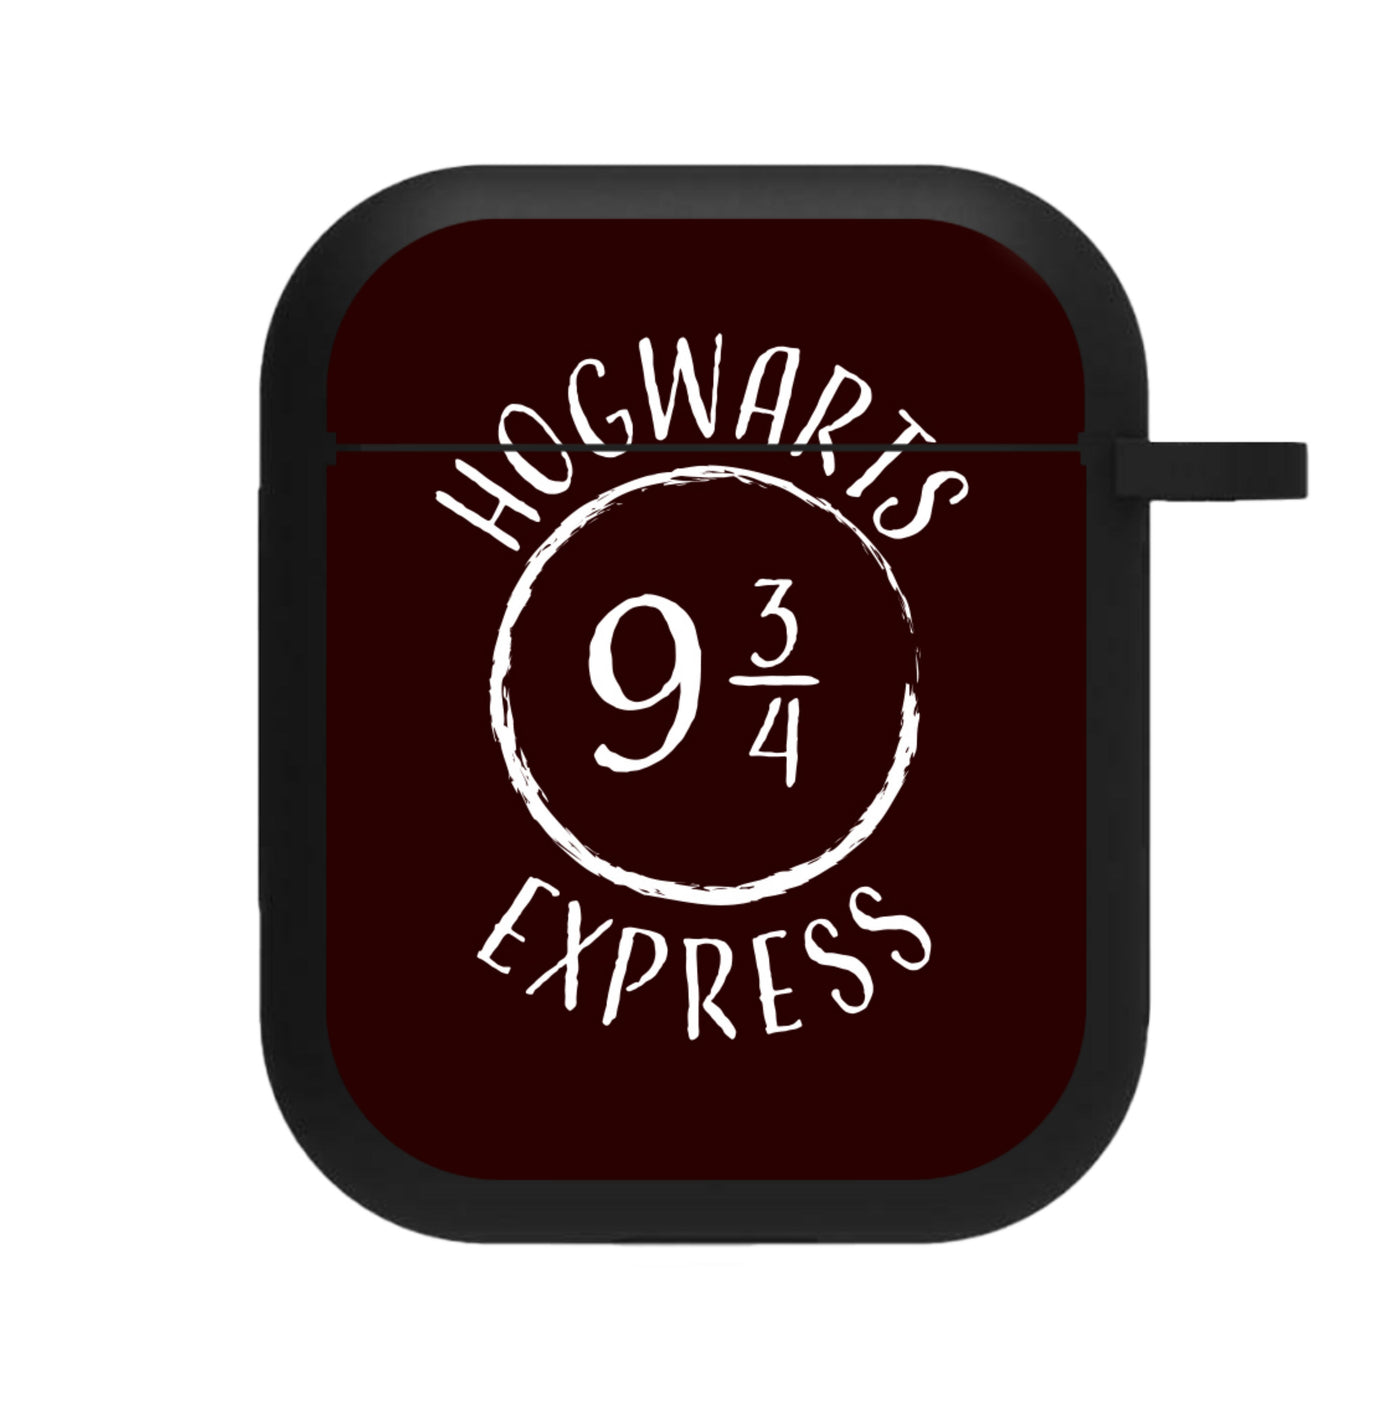 Hogwarts Express - Harry Potter AirPods Case